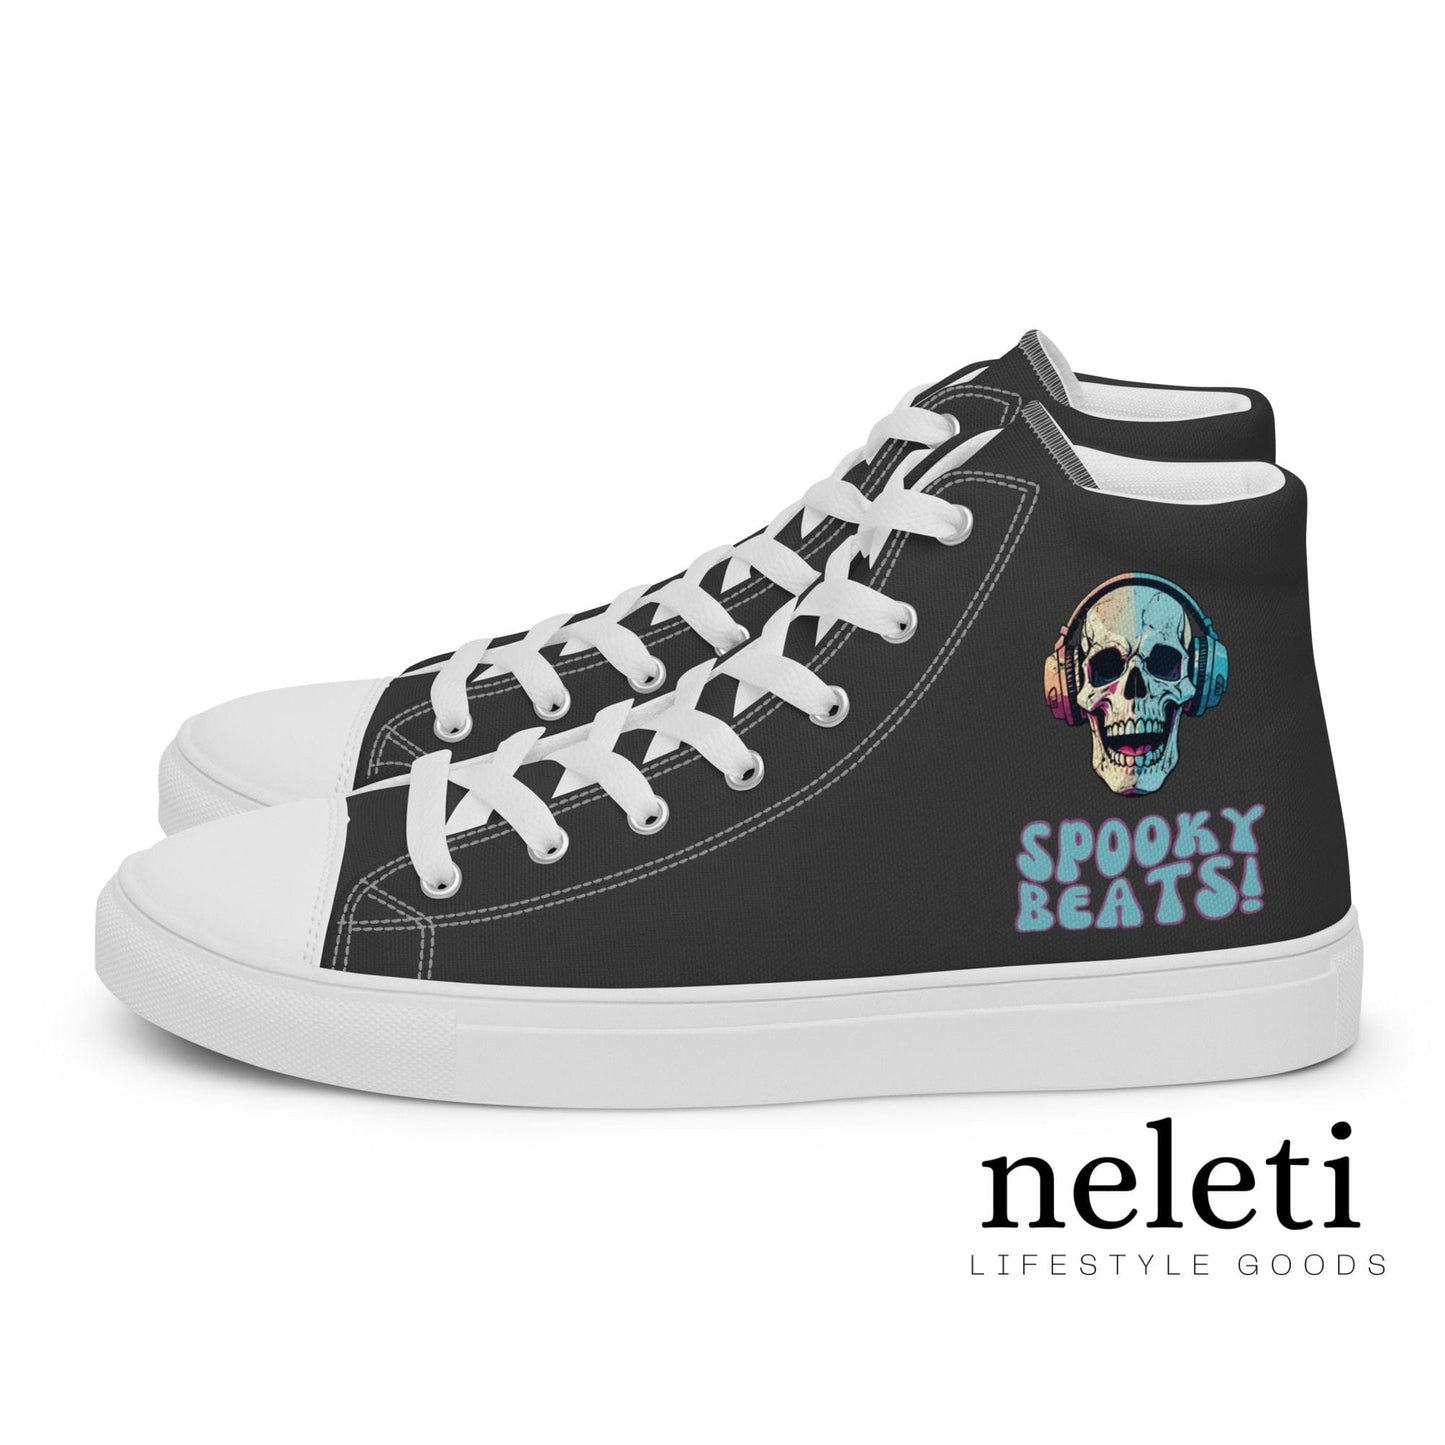 neleti.com-halloween-shoes-for-men